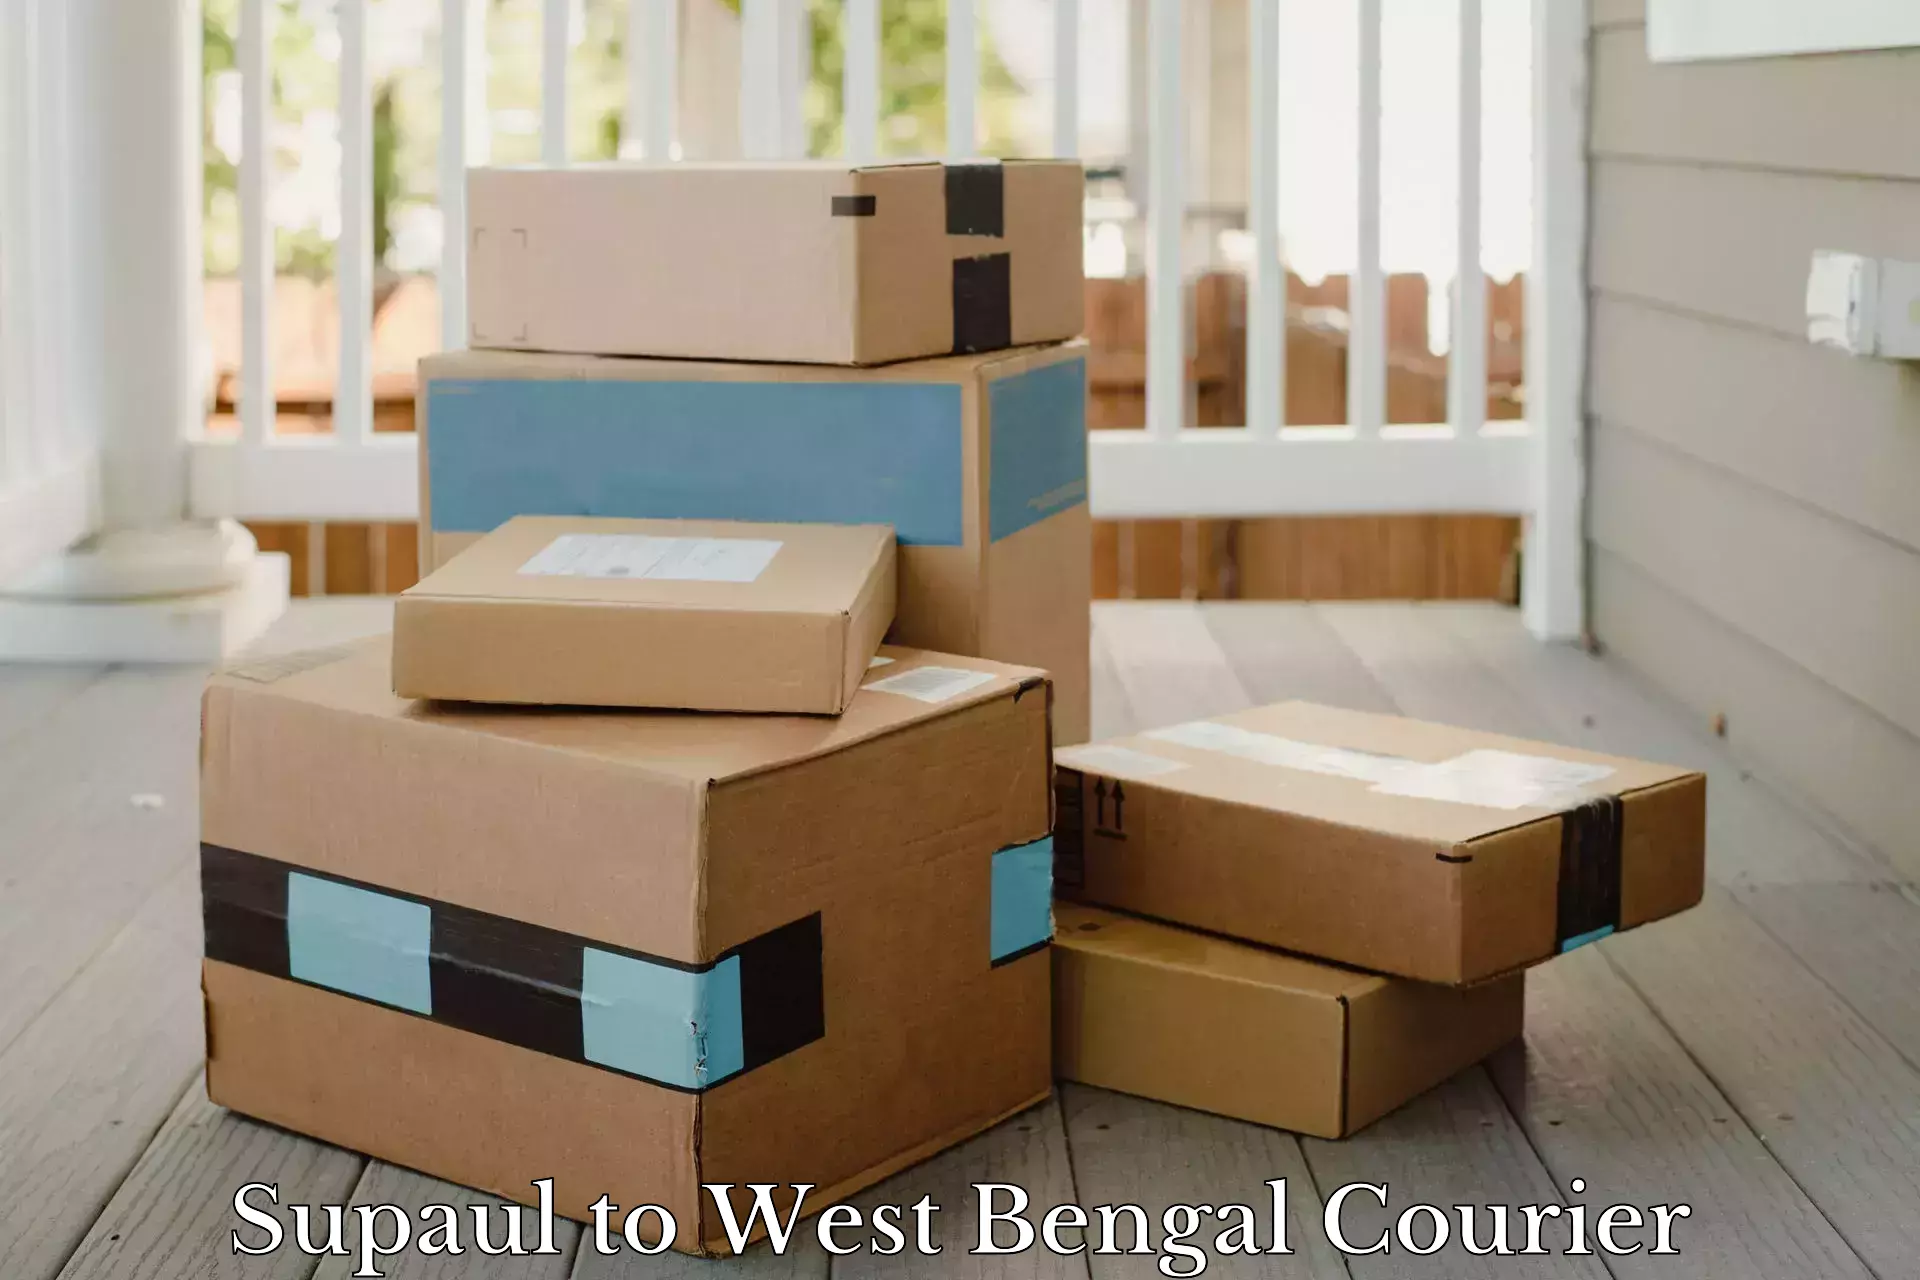 Global logistics network Supaul to West Bengal